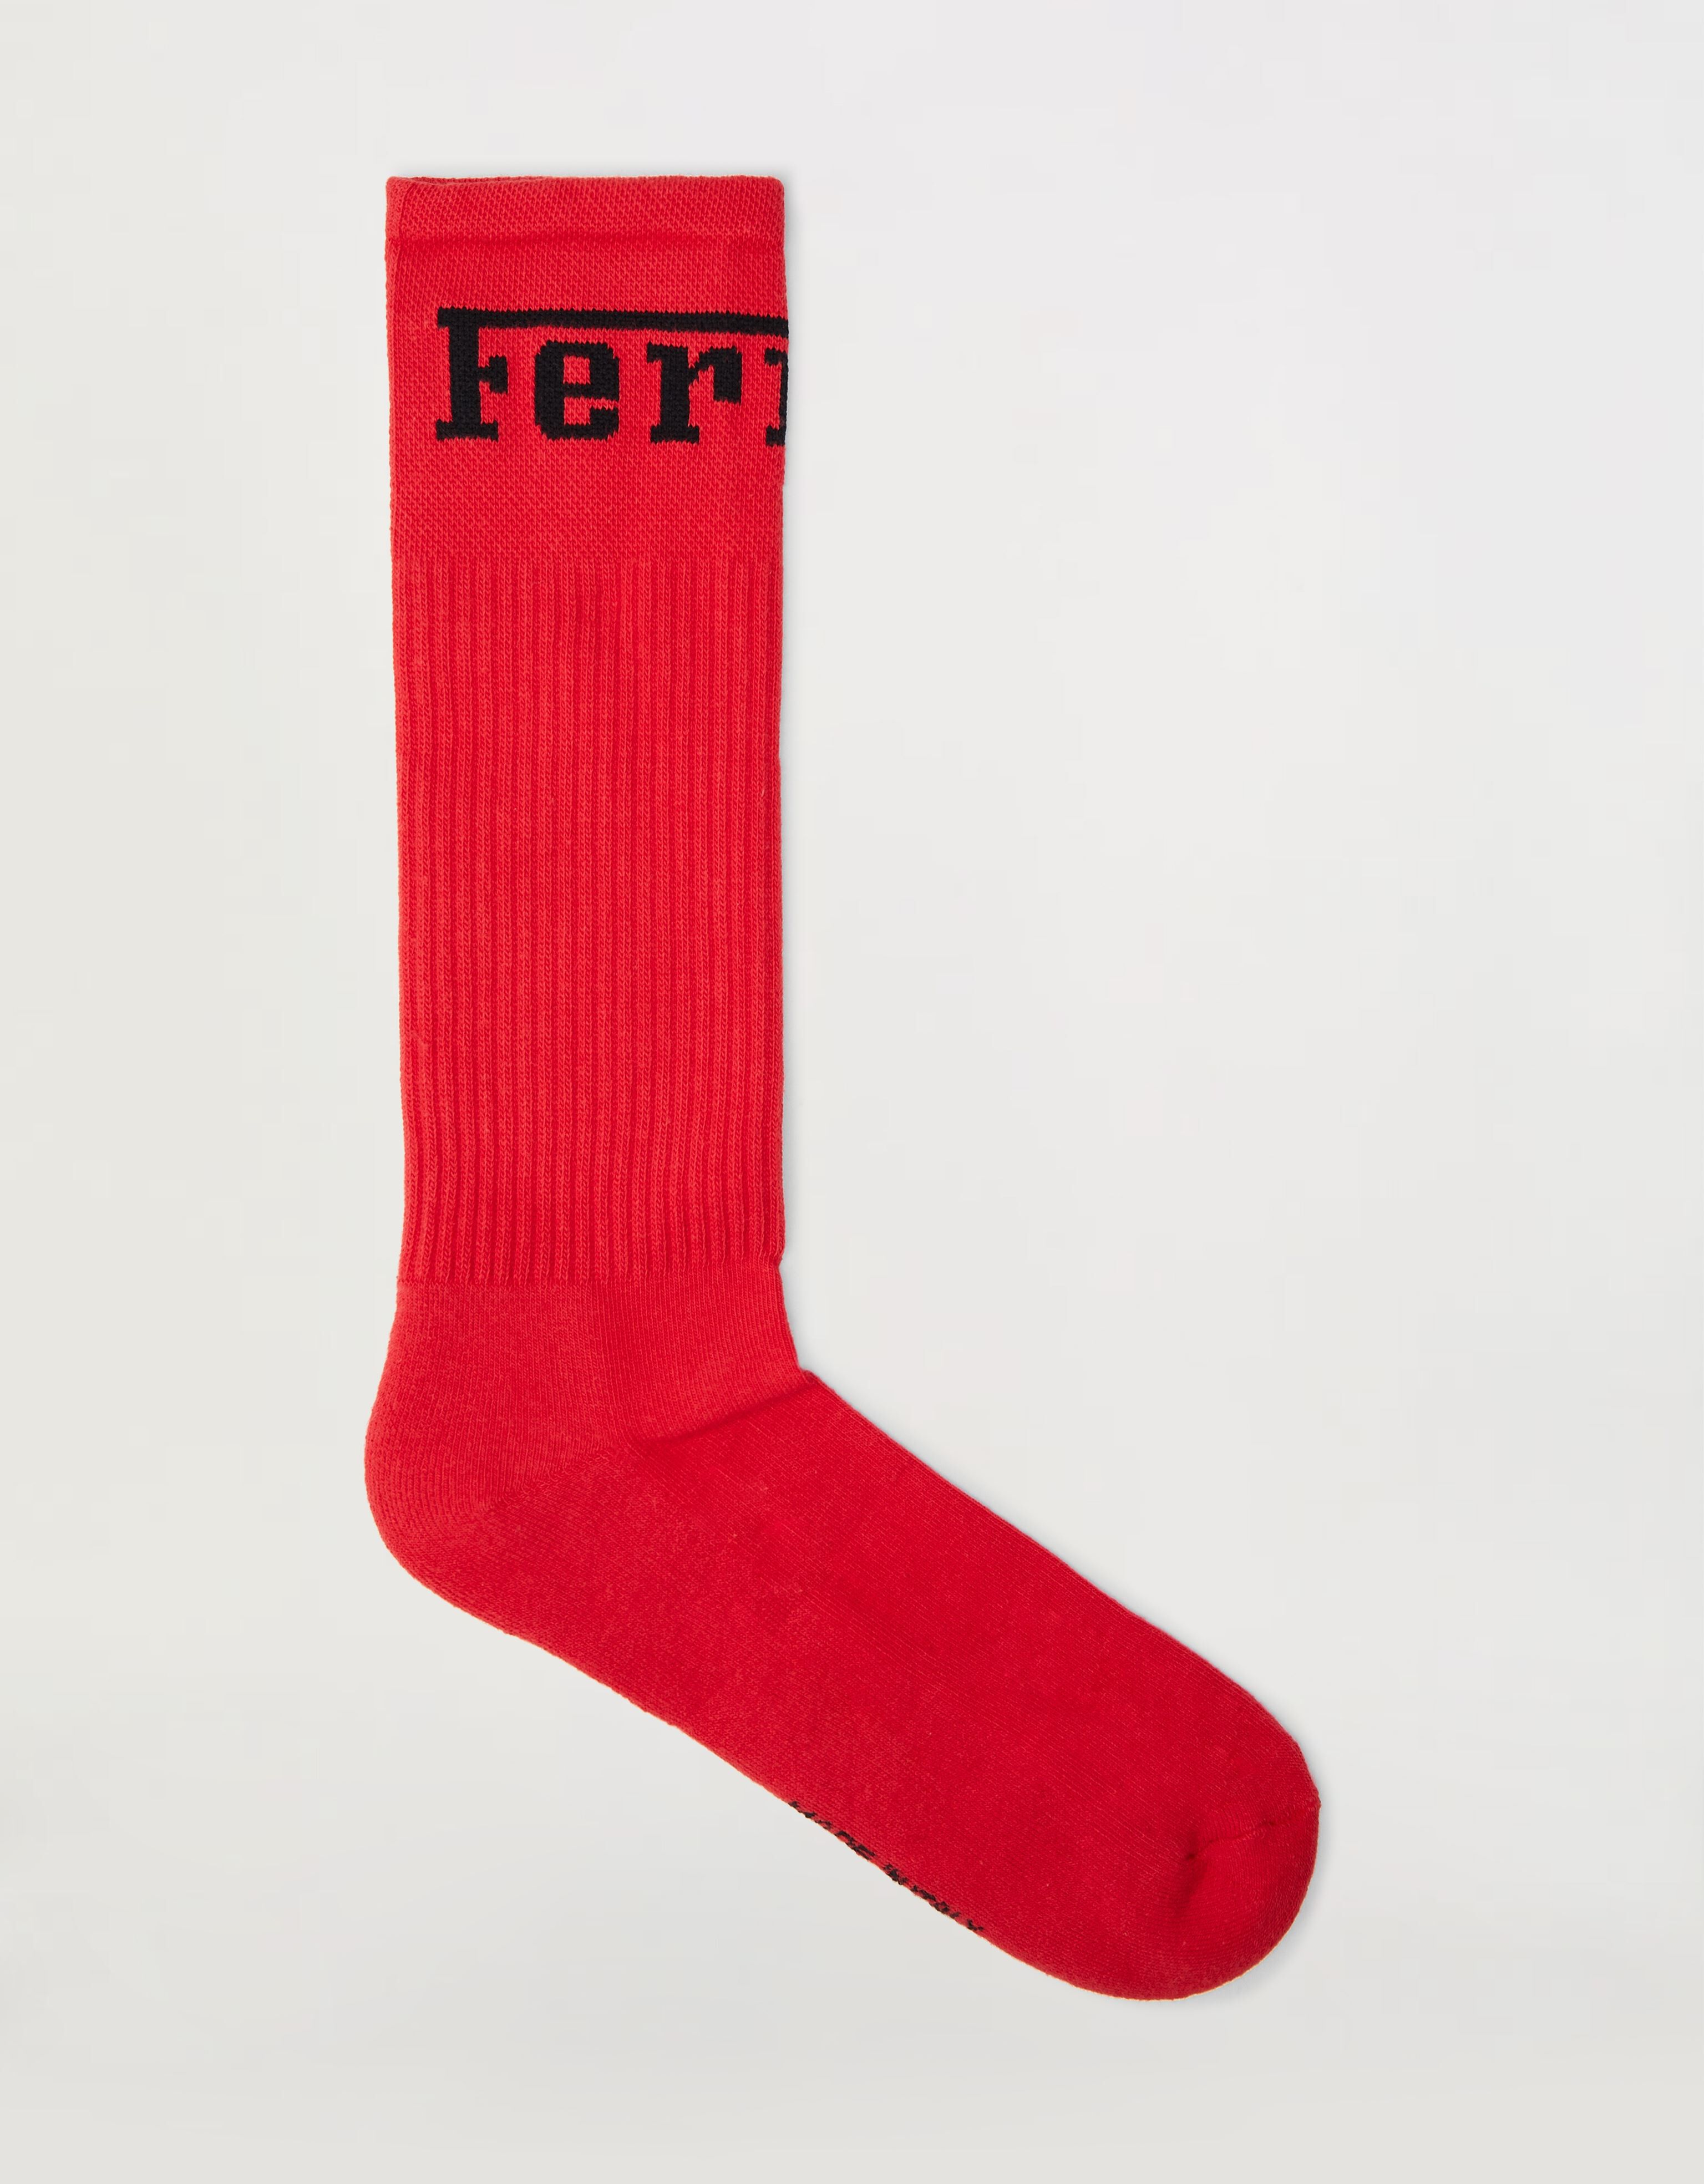 Ferrari Cotton blend socks with Ferrari logo Rosso Corsa 20007f